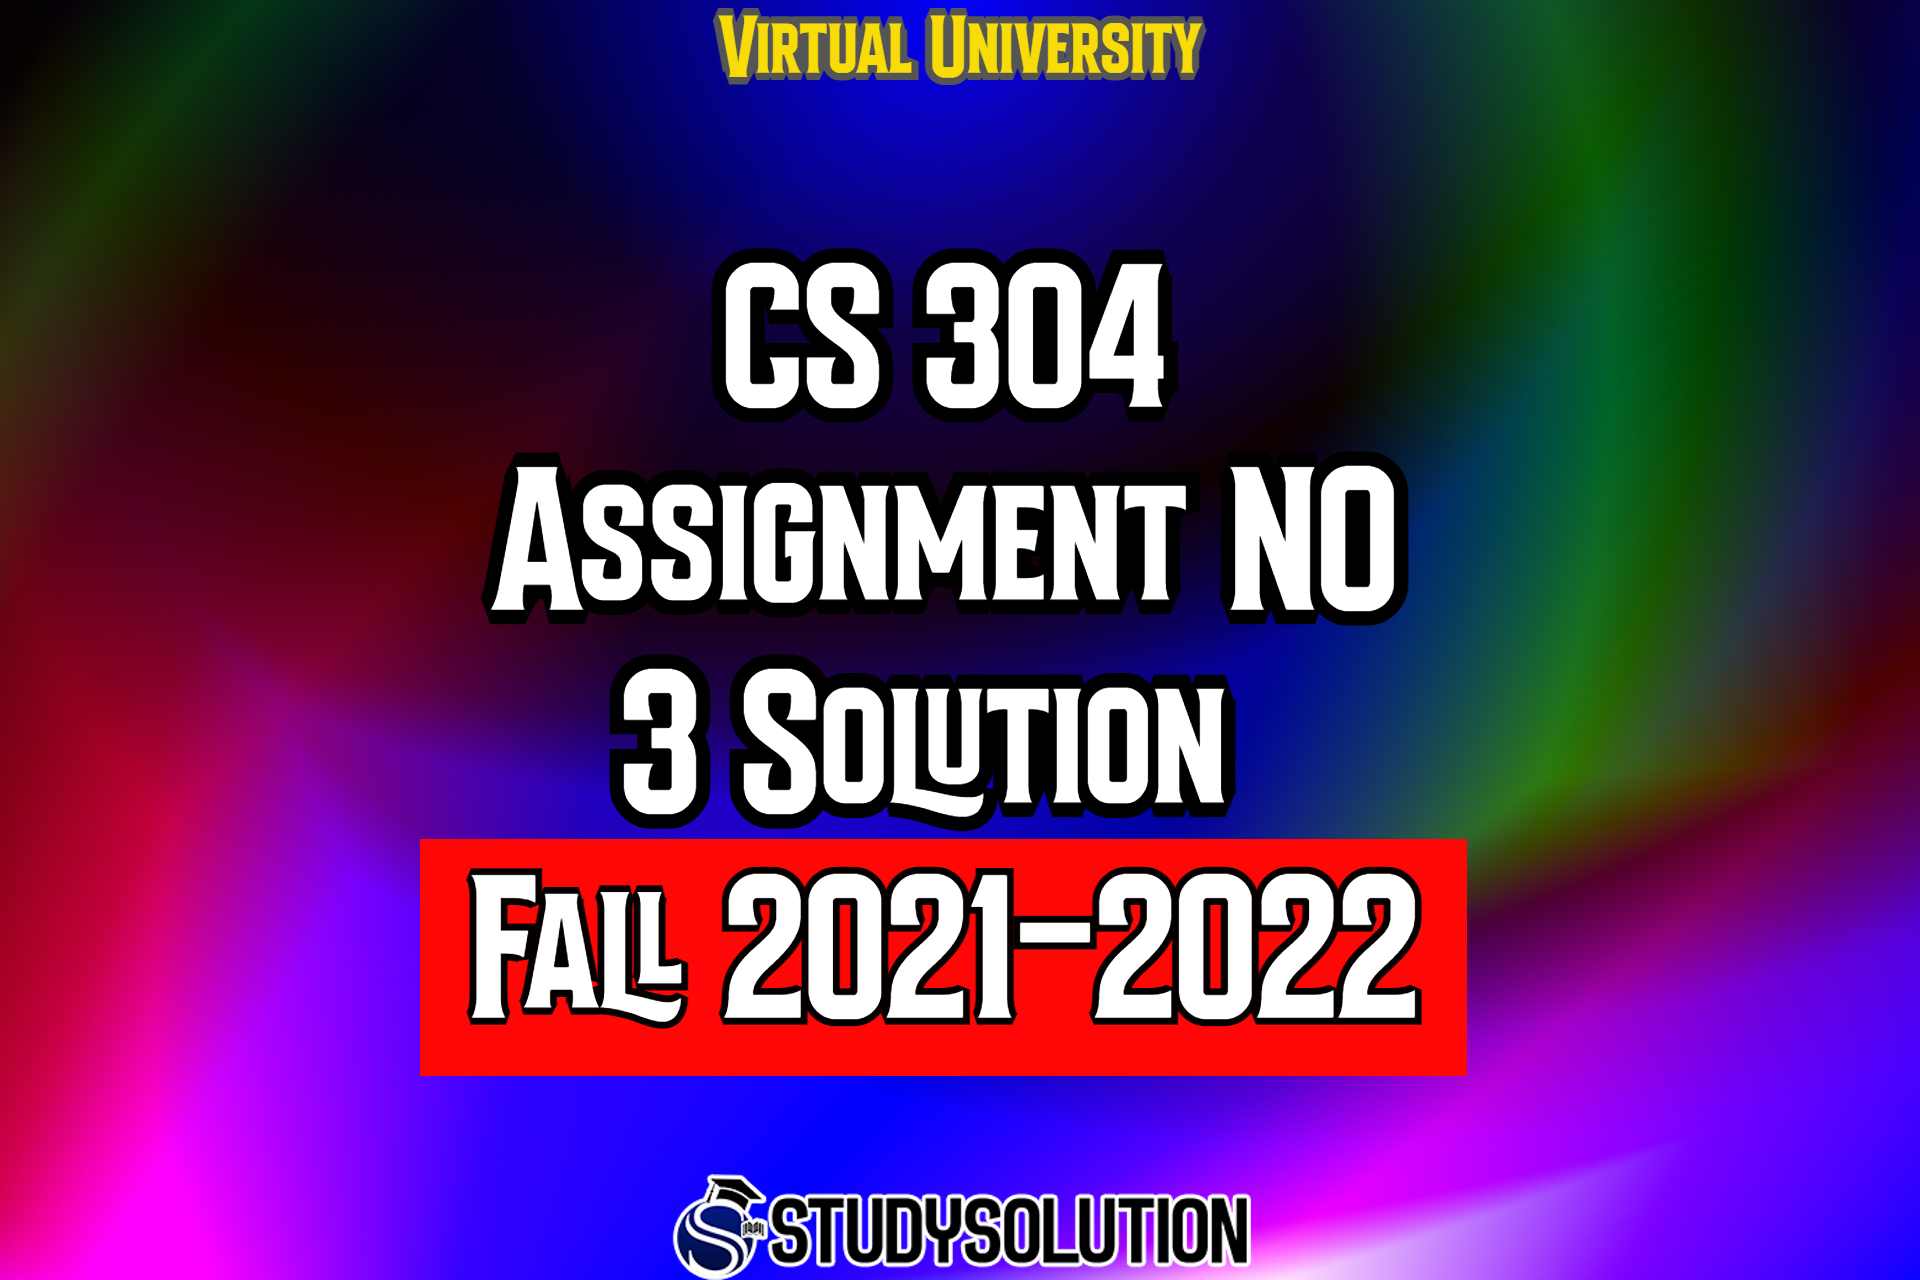 CS304 Assignment No 3 Solution Fall 2022